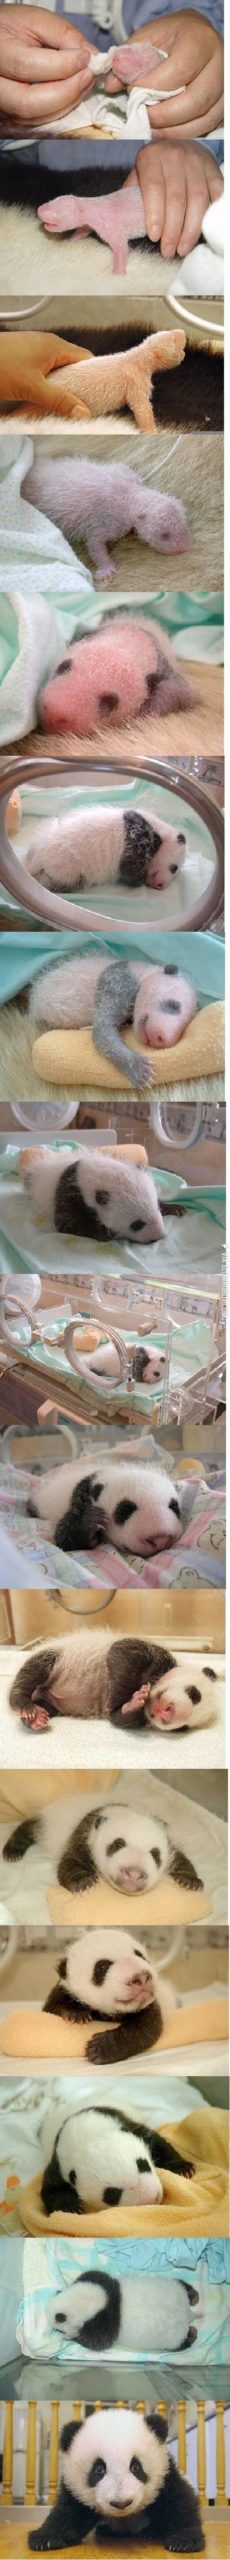 Baby+panda.